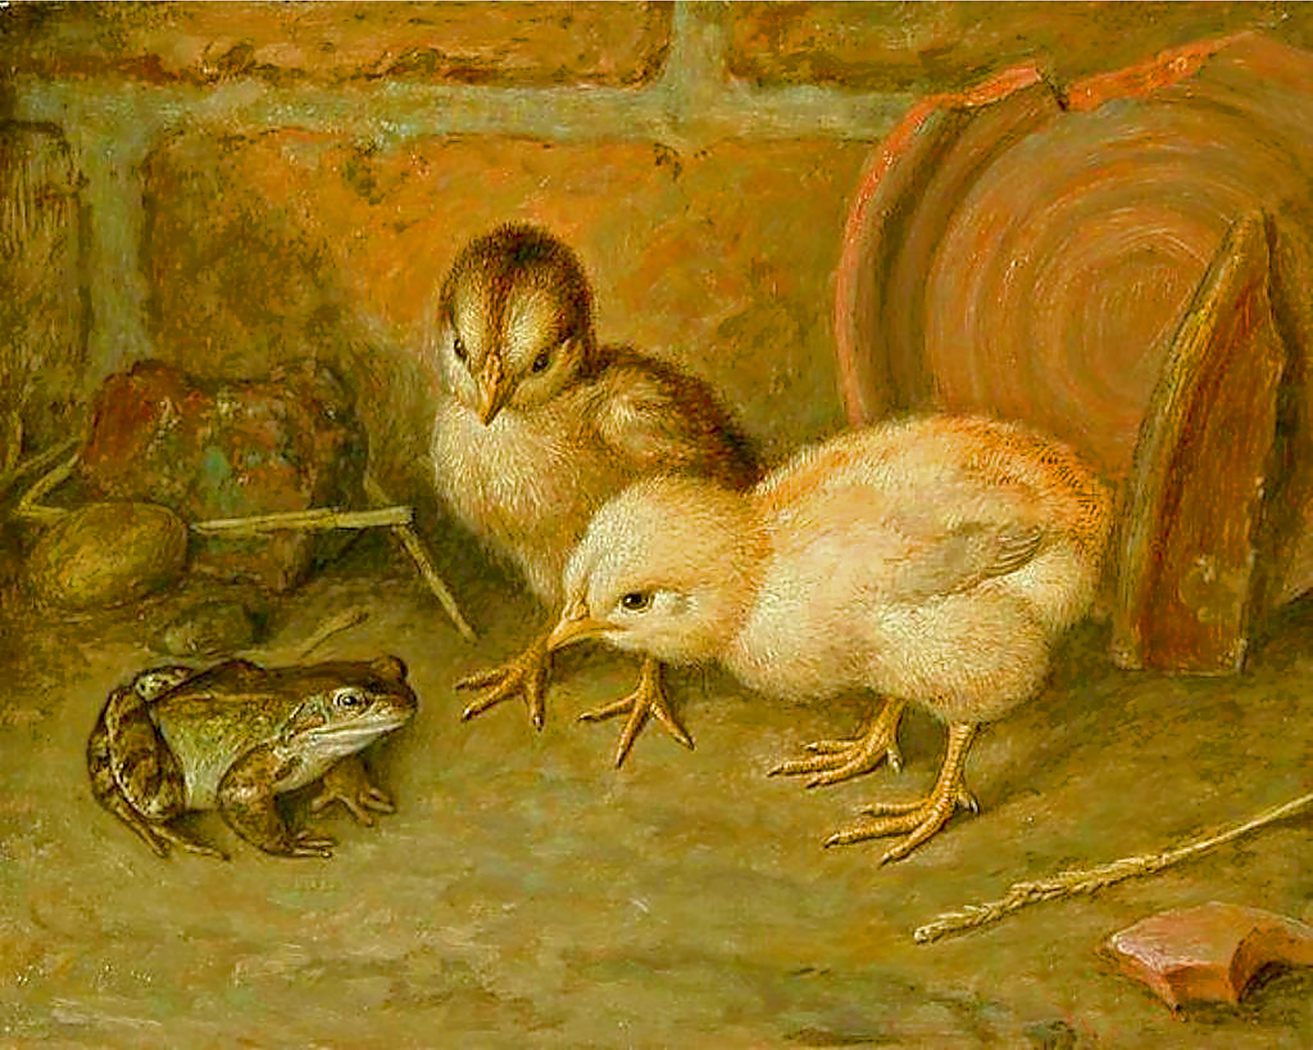 Farm/Pastoral Farm Chicks and Frog Framed Oil Painting Pr ...